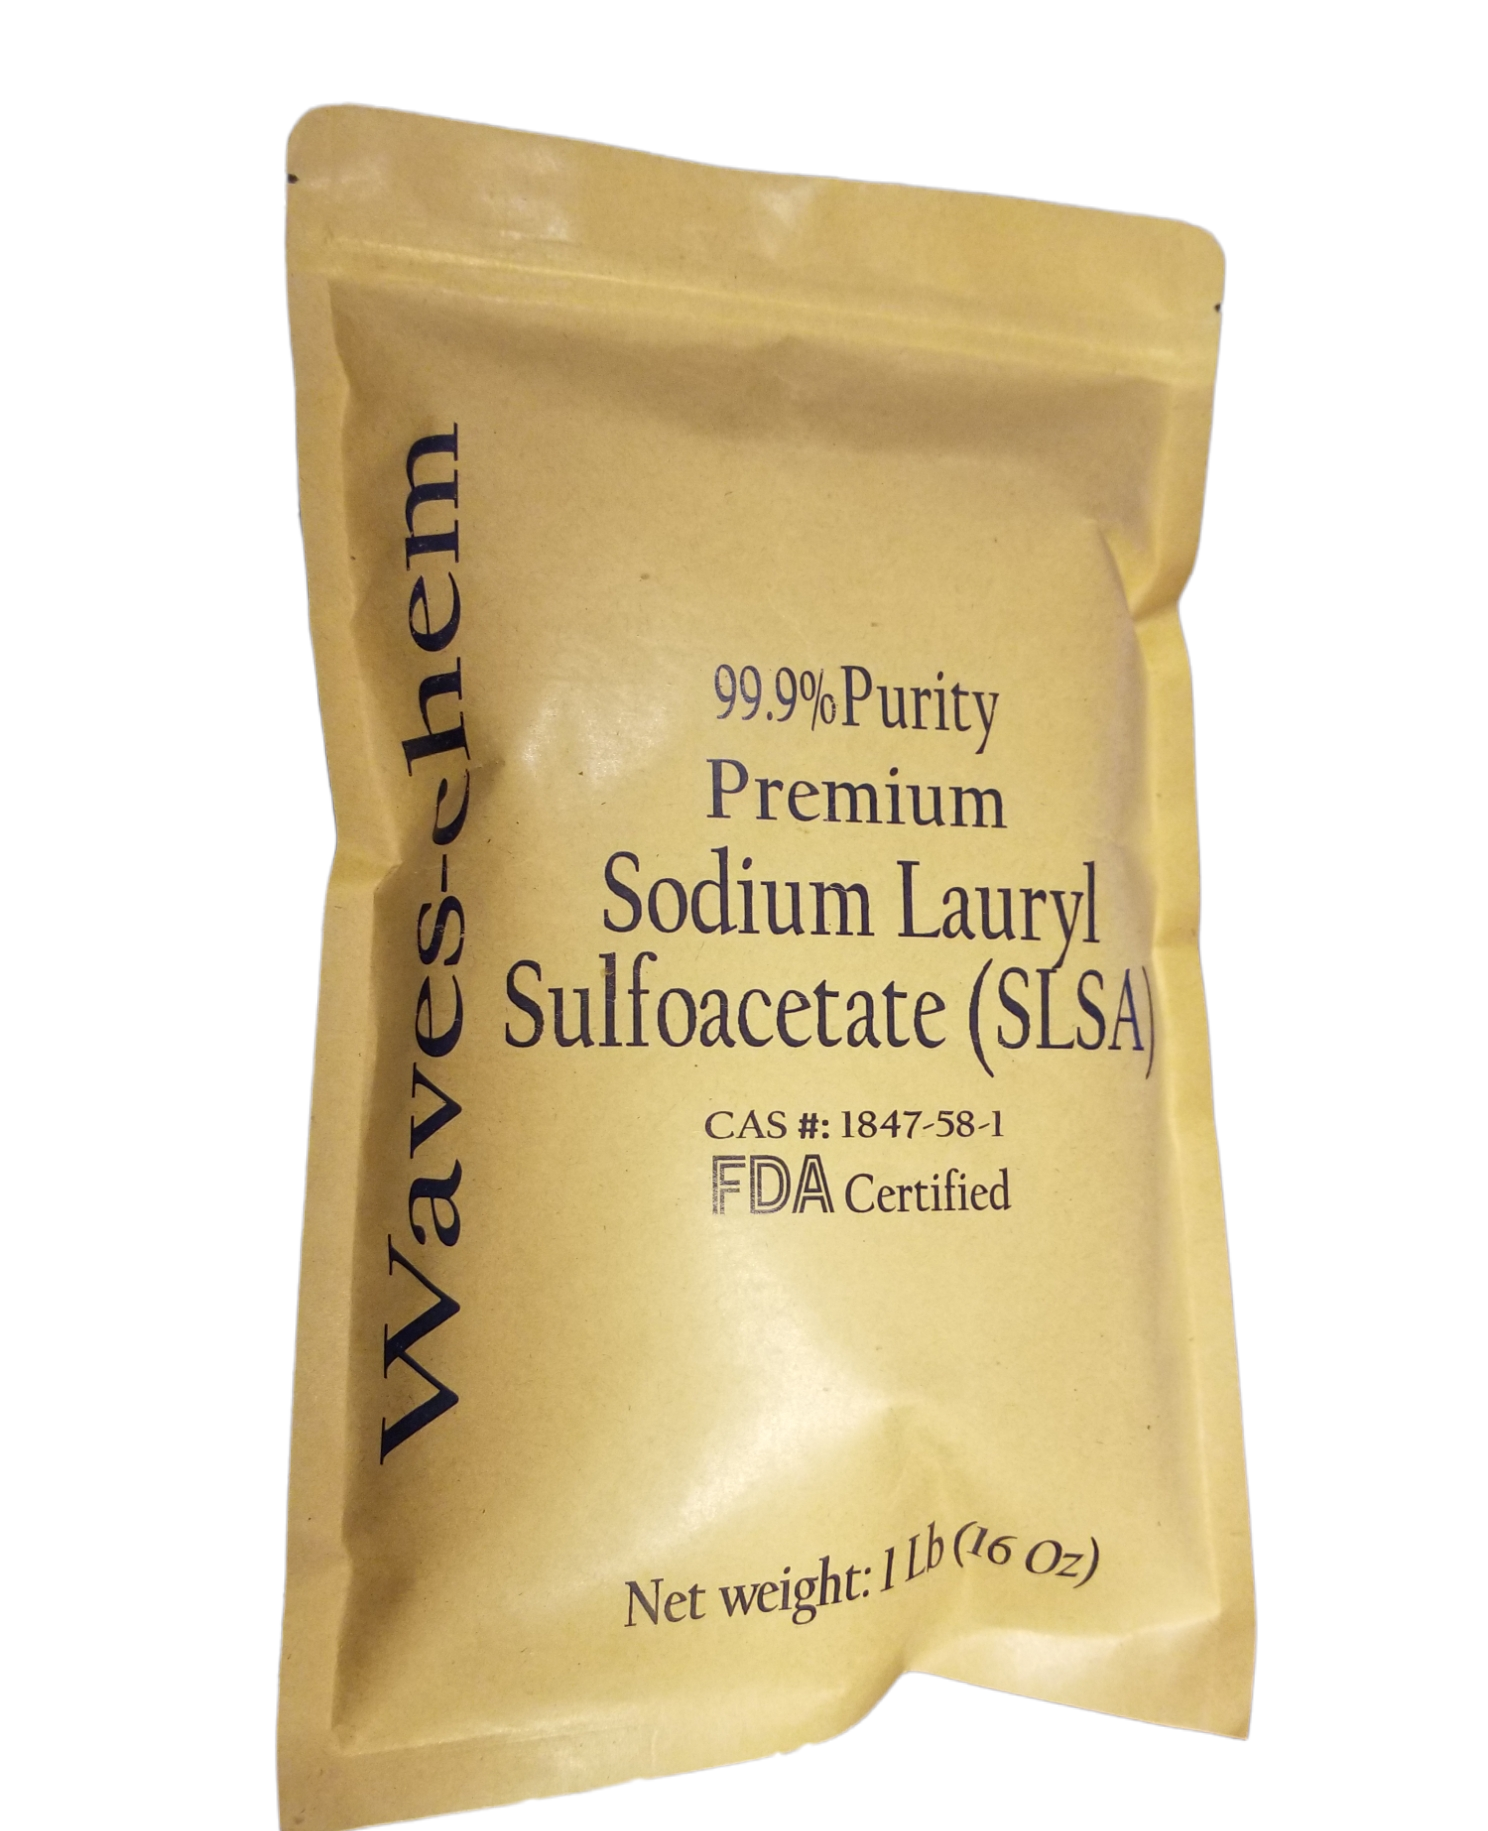 1 lb Sodium Lauryl Sulfoacetate (16 oz) SLSA foaming powder. 